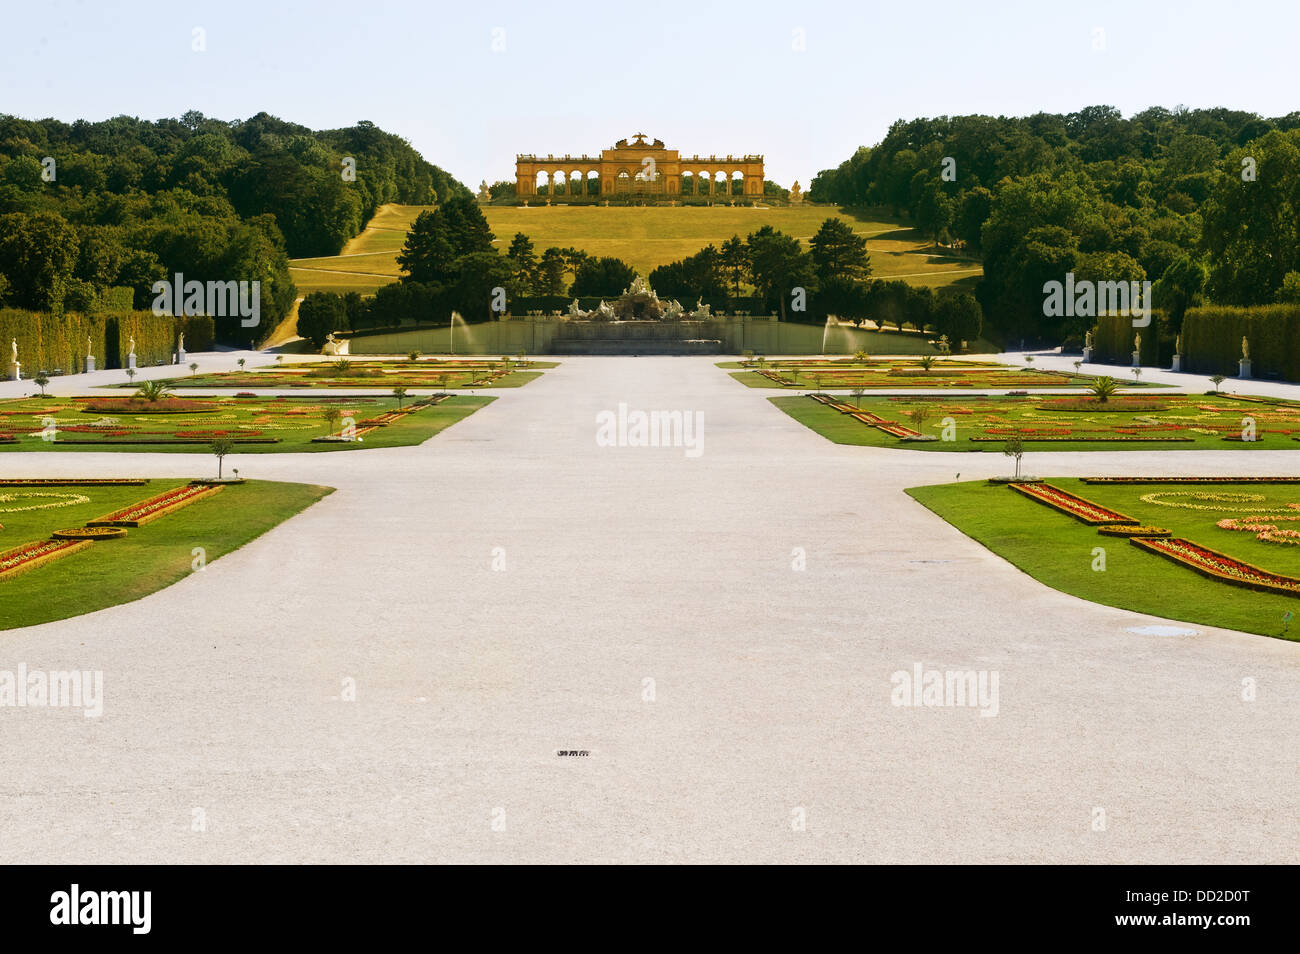 Vienna, Austria - Schoenbrunn Palace, Gloriette a UNESCO World Heritage Site Stock Photo